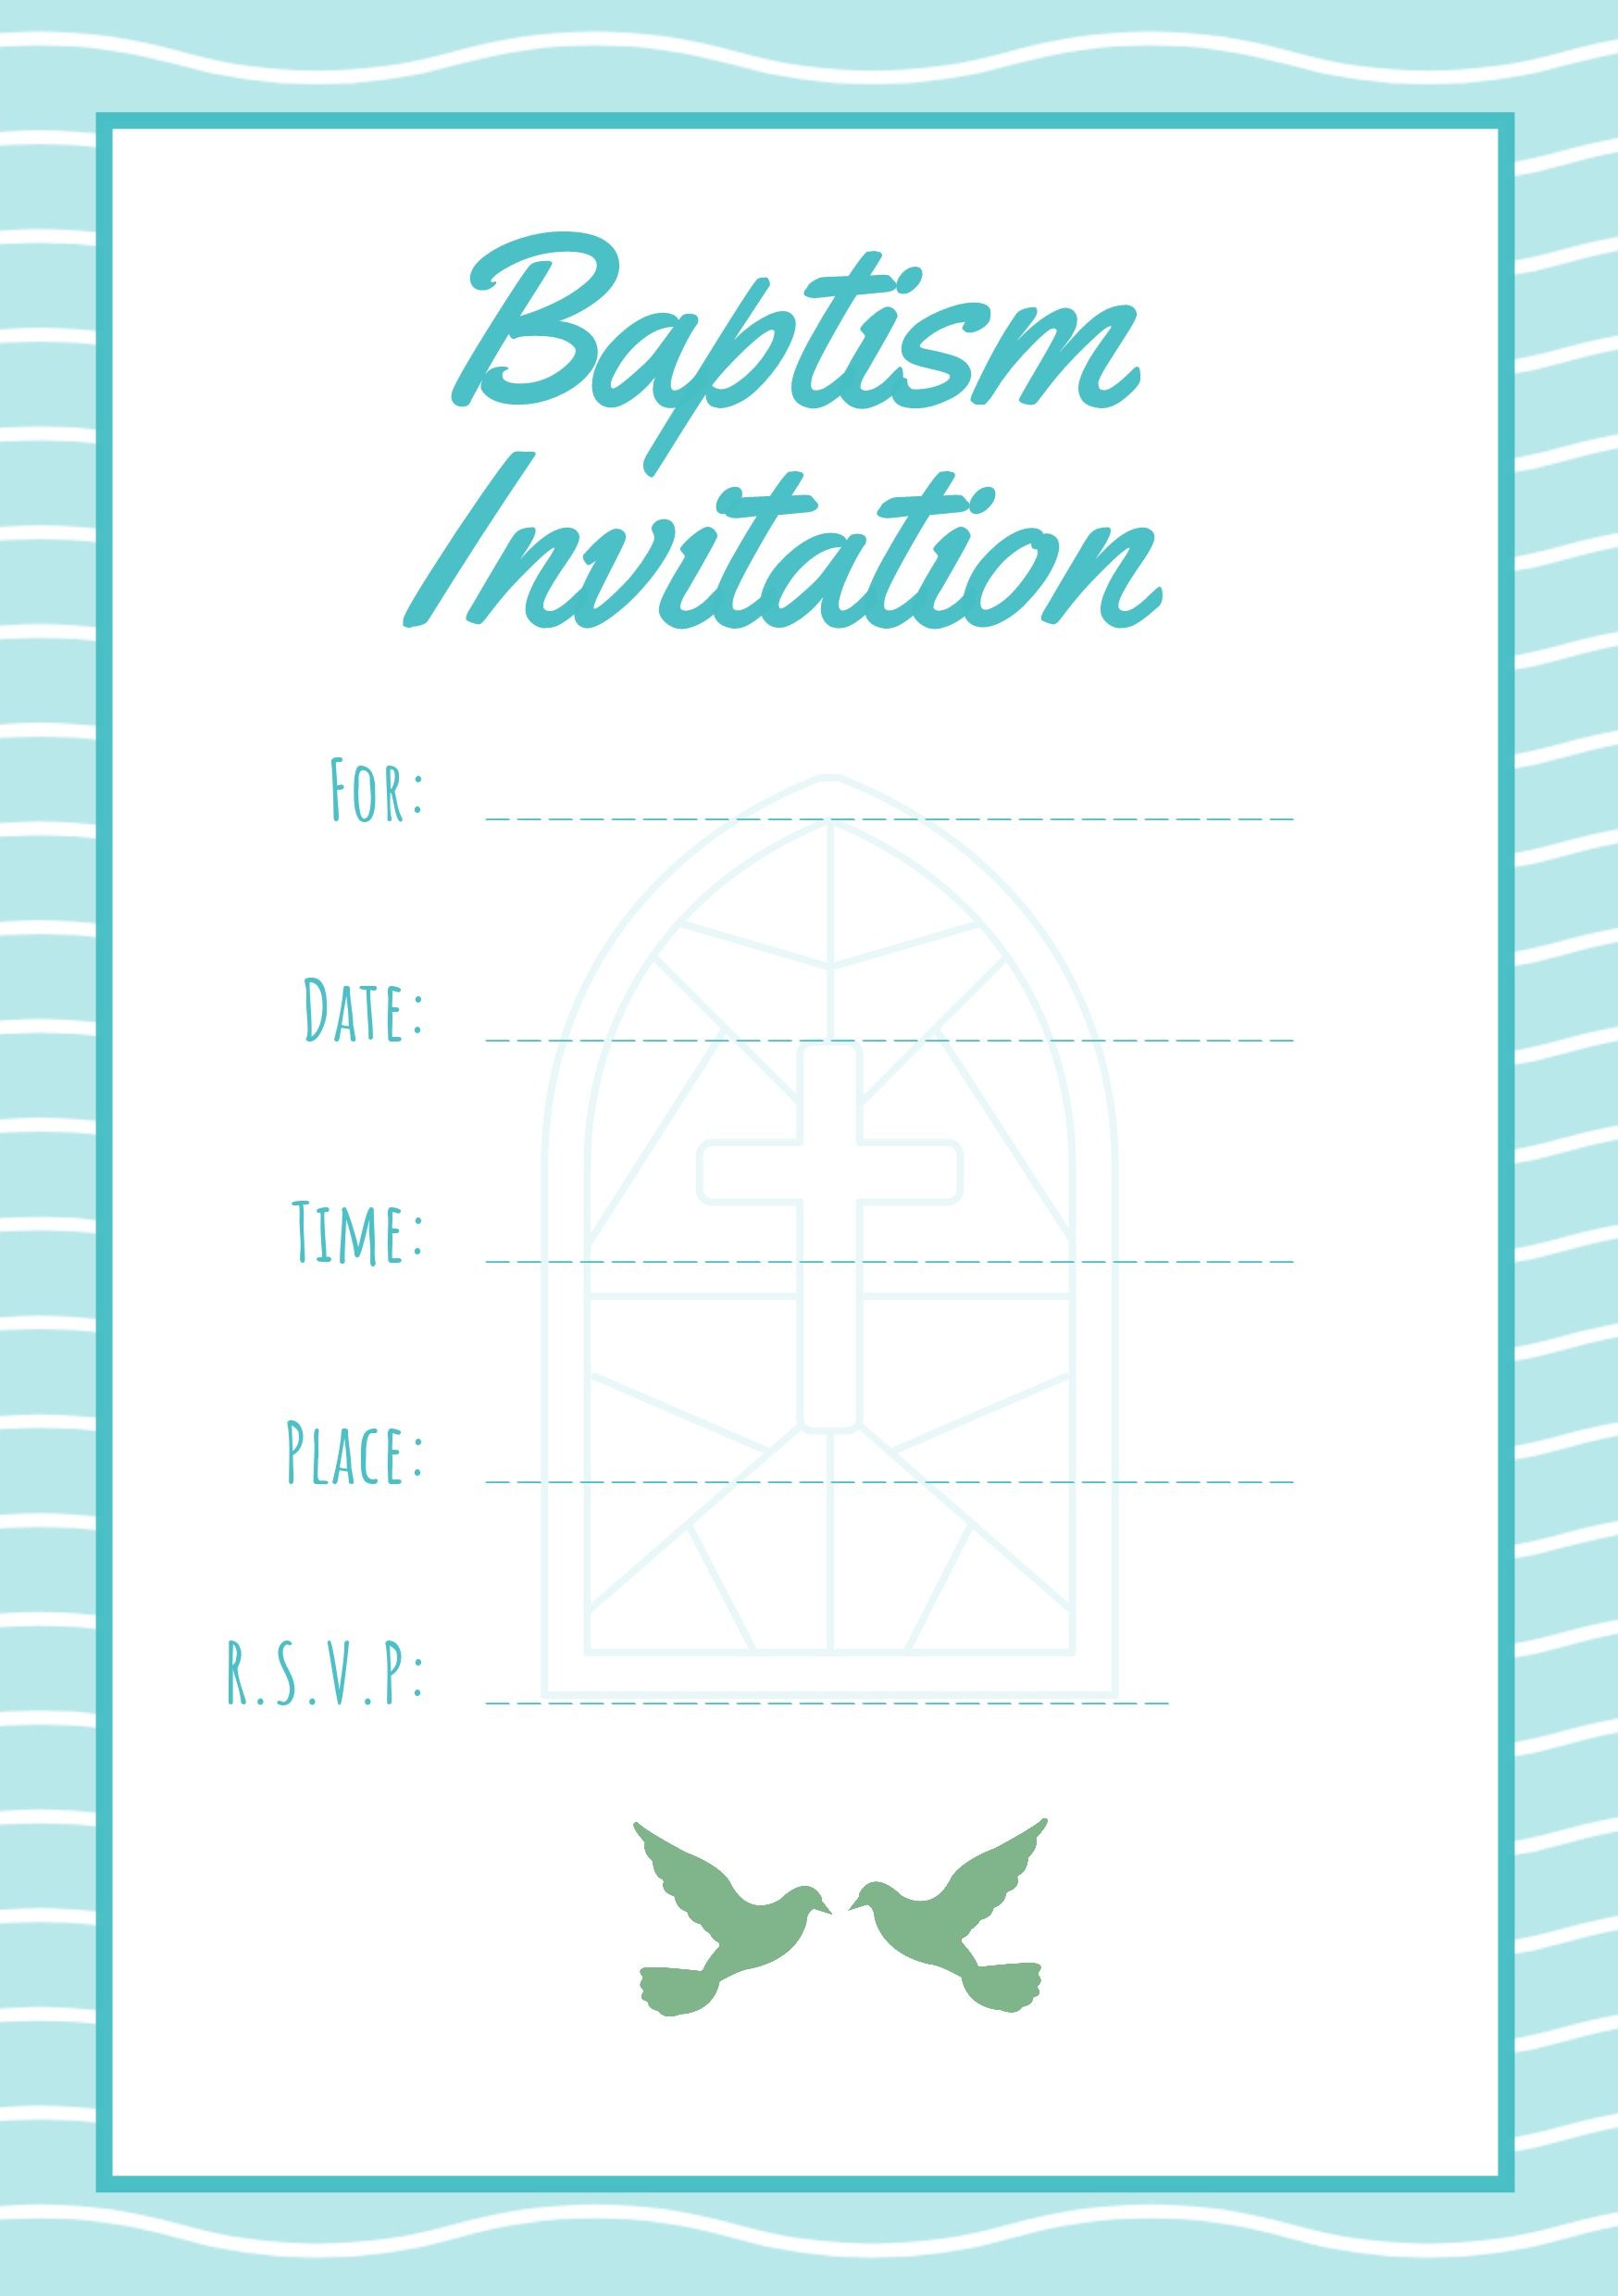 Convite de batismo azul e branco com texto de script e ícones religiosos